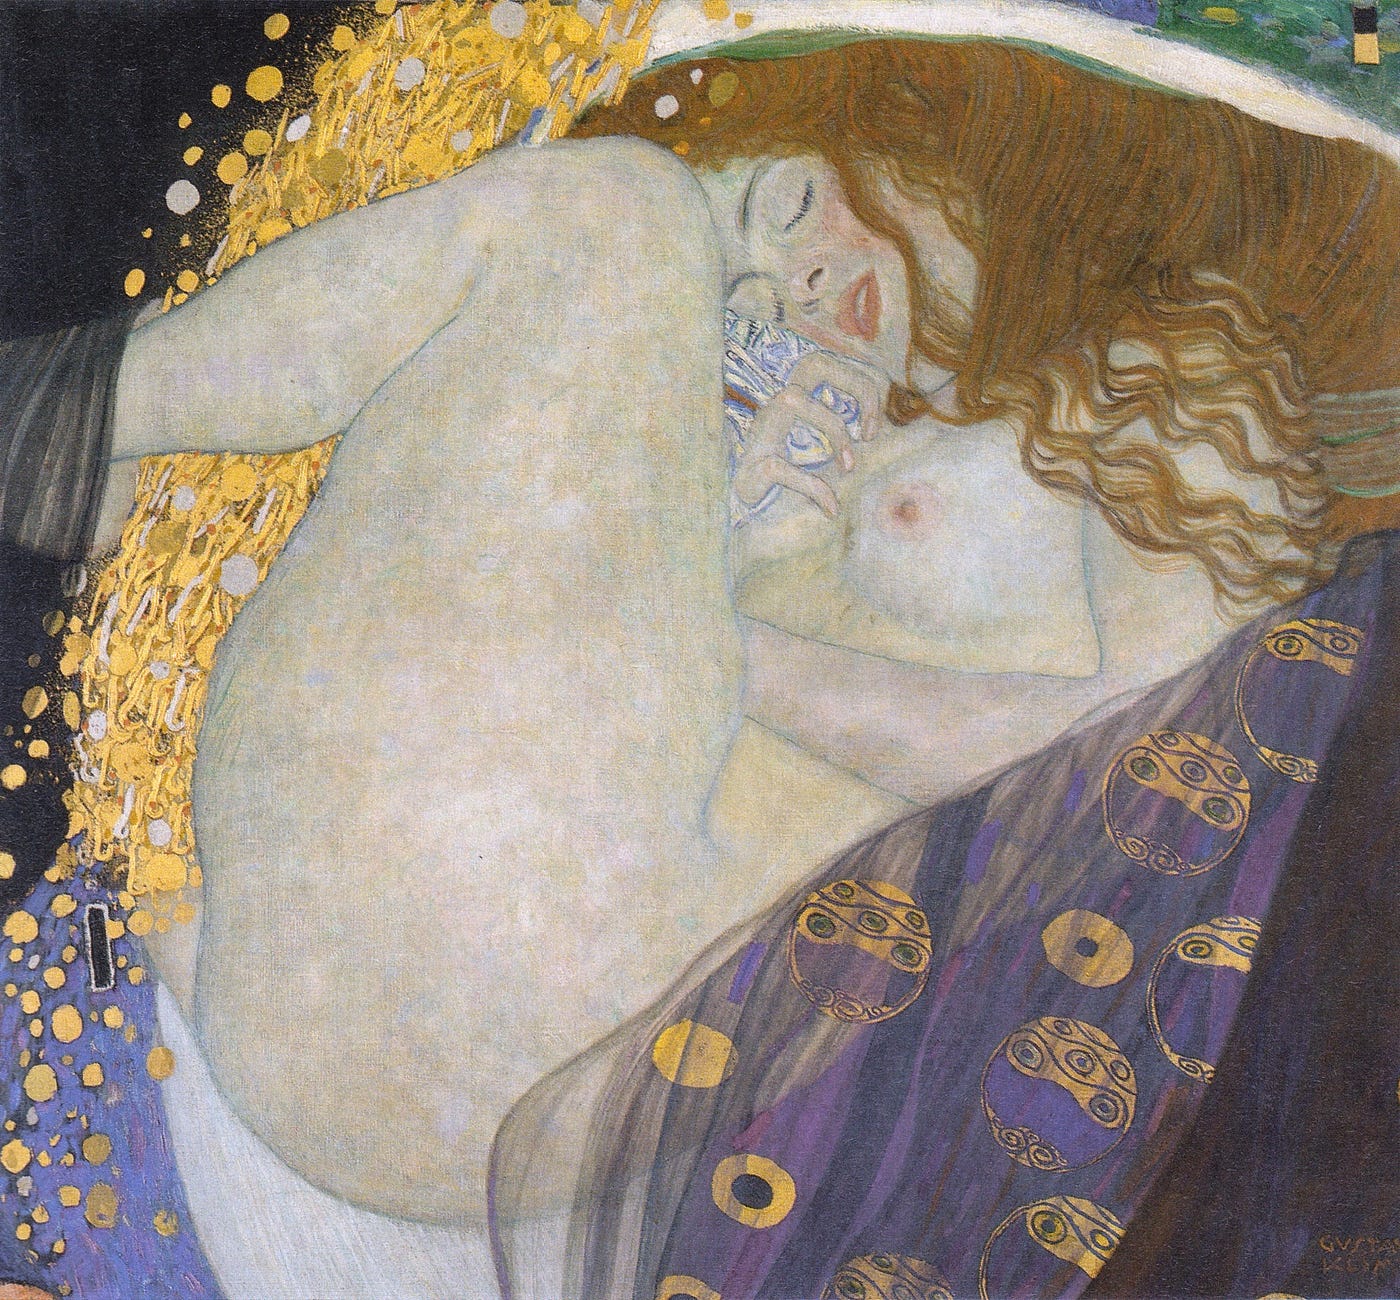 Analysis of Danaë by Gustav Klimt | by Christopher P Jones | Medium